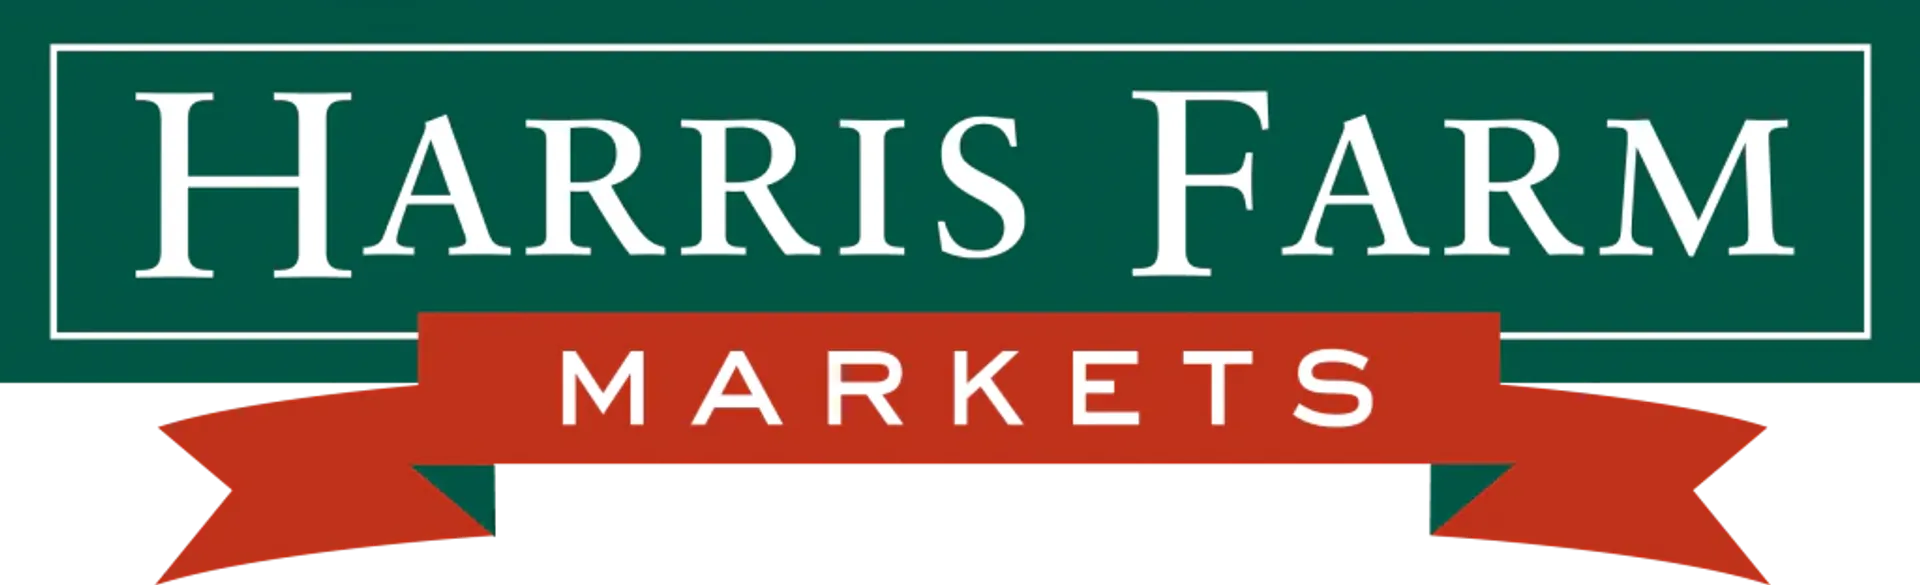 HARRIS FARM MARKETS logo of current catalogue